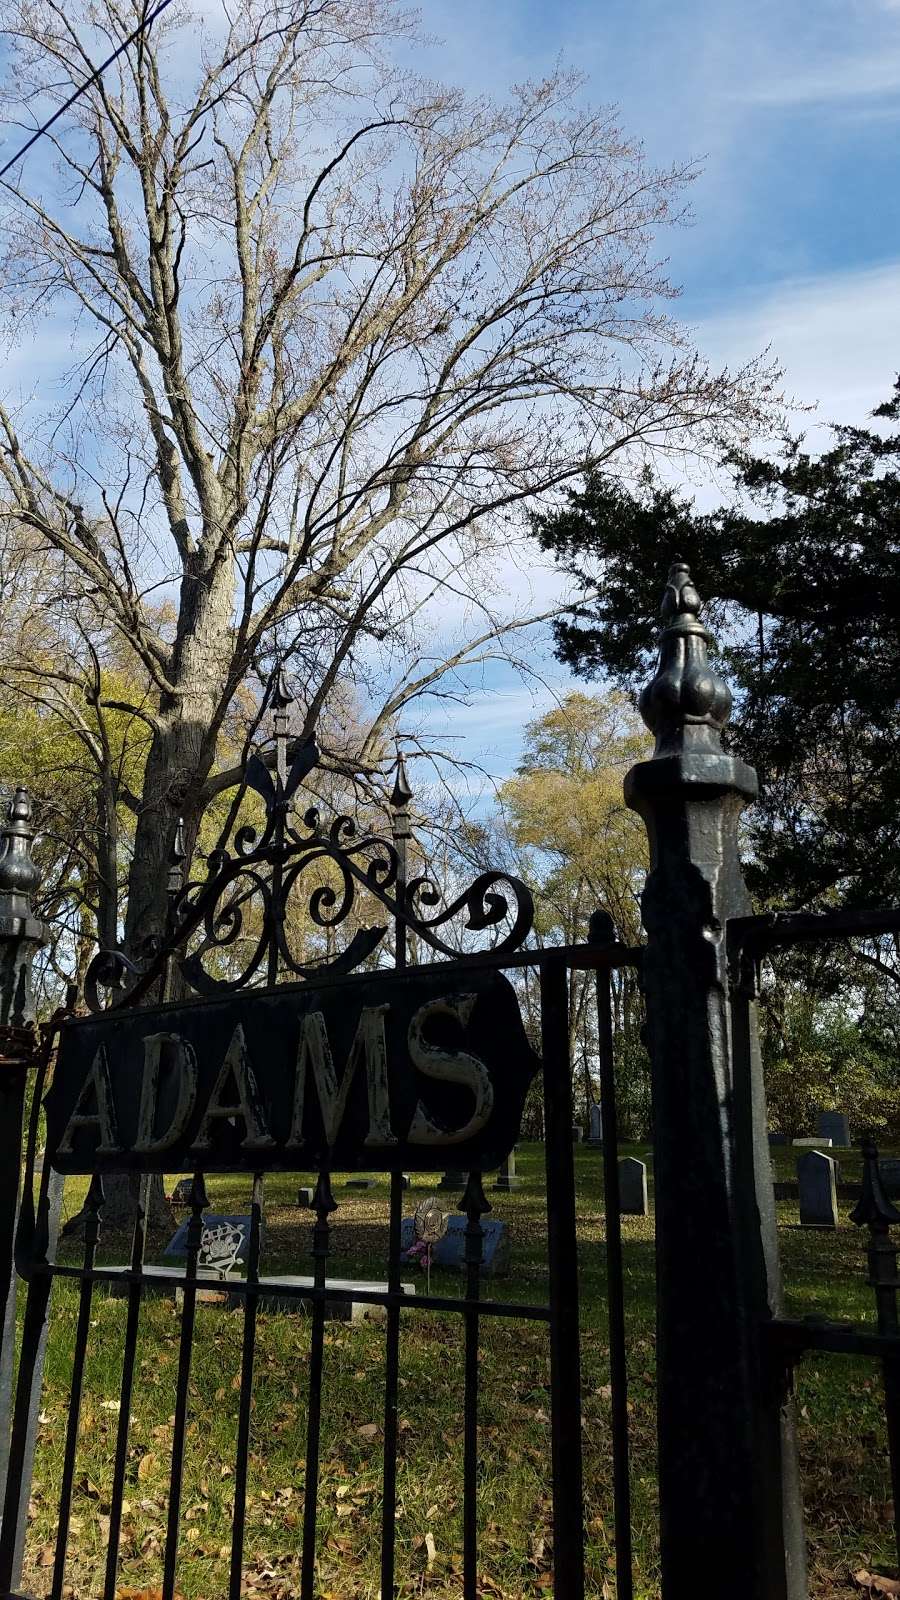 Adams Cemetery | 8544-9260 Adams Rd, East Troy, WI 53120, USA